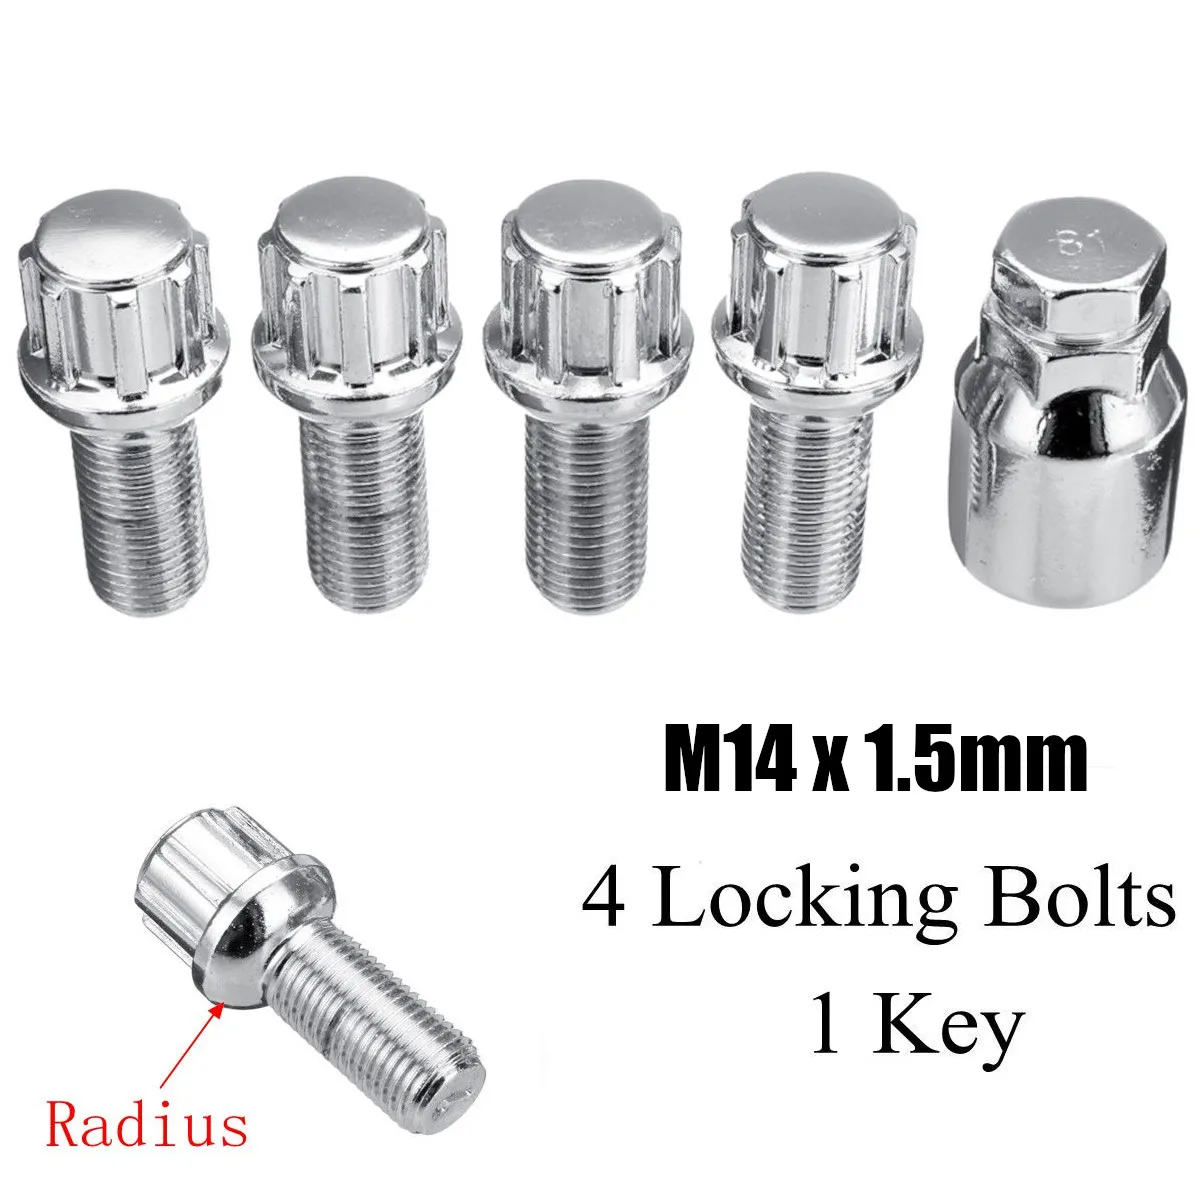 Skoda Roomster 5J 06 Bimecc M14 x 1.5 Radius Locking Wheel Nuts/Bolts 